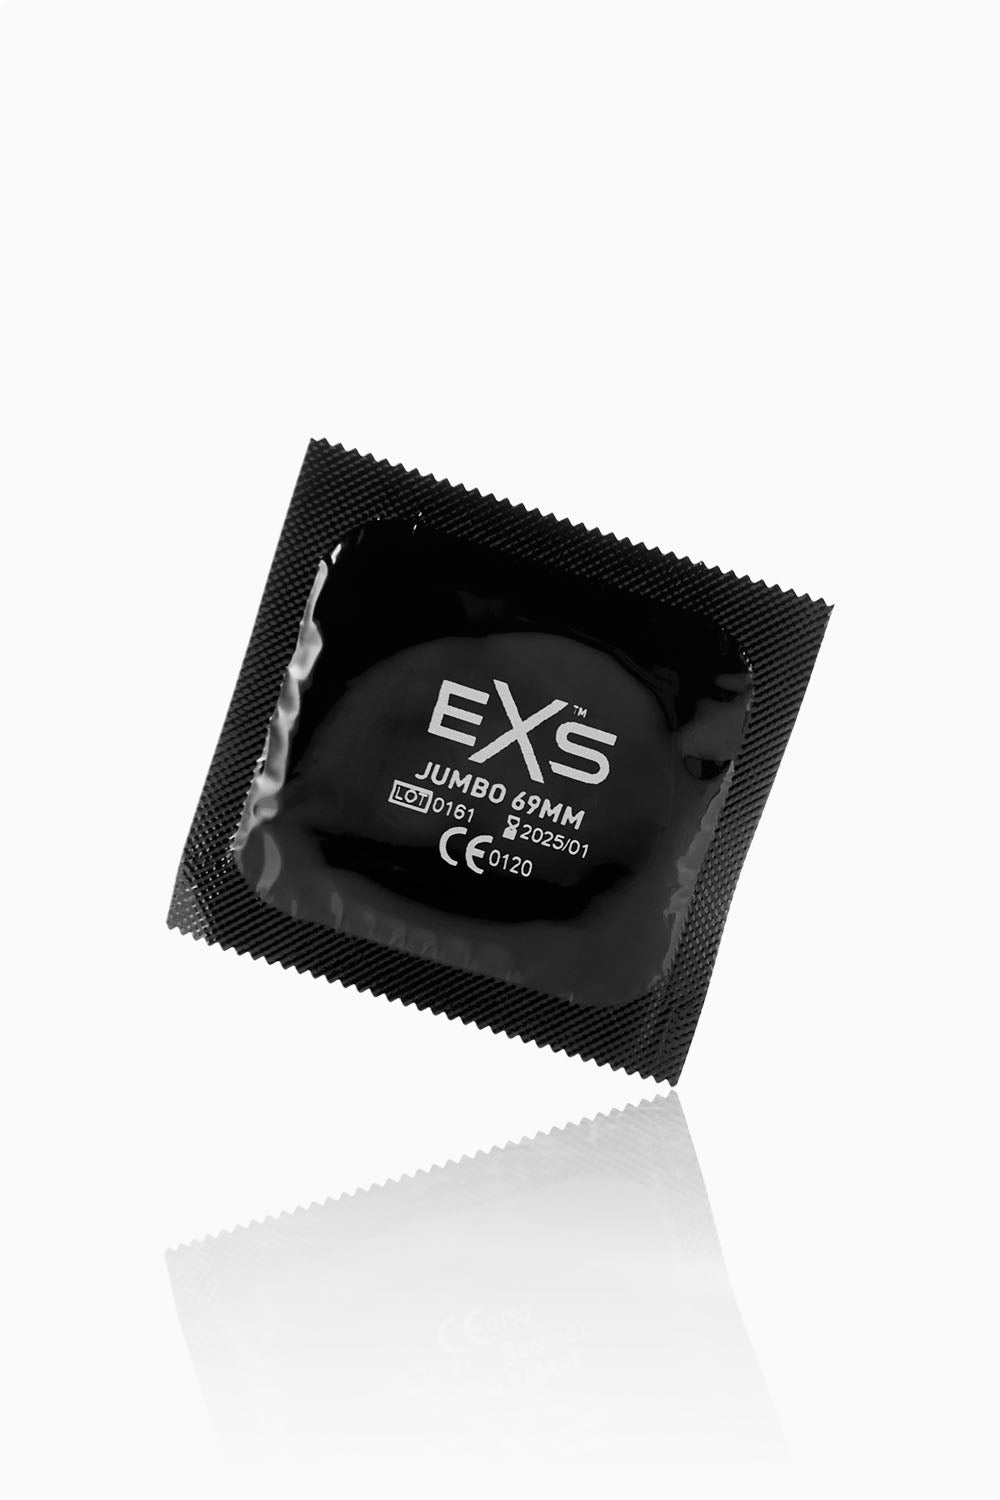 EXS Jumbo Condoms 26 Pack